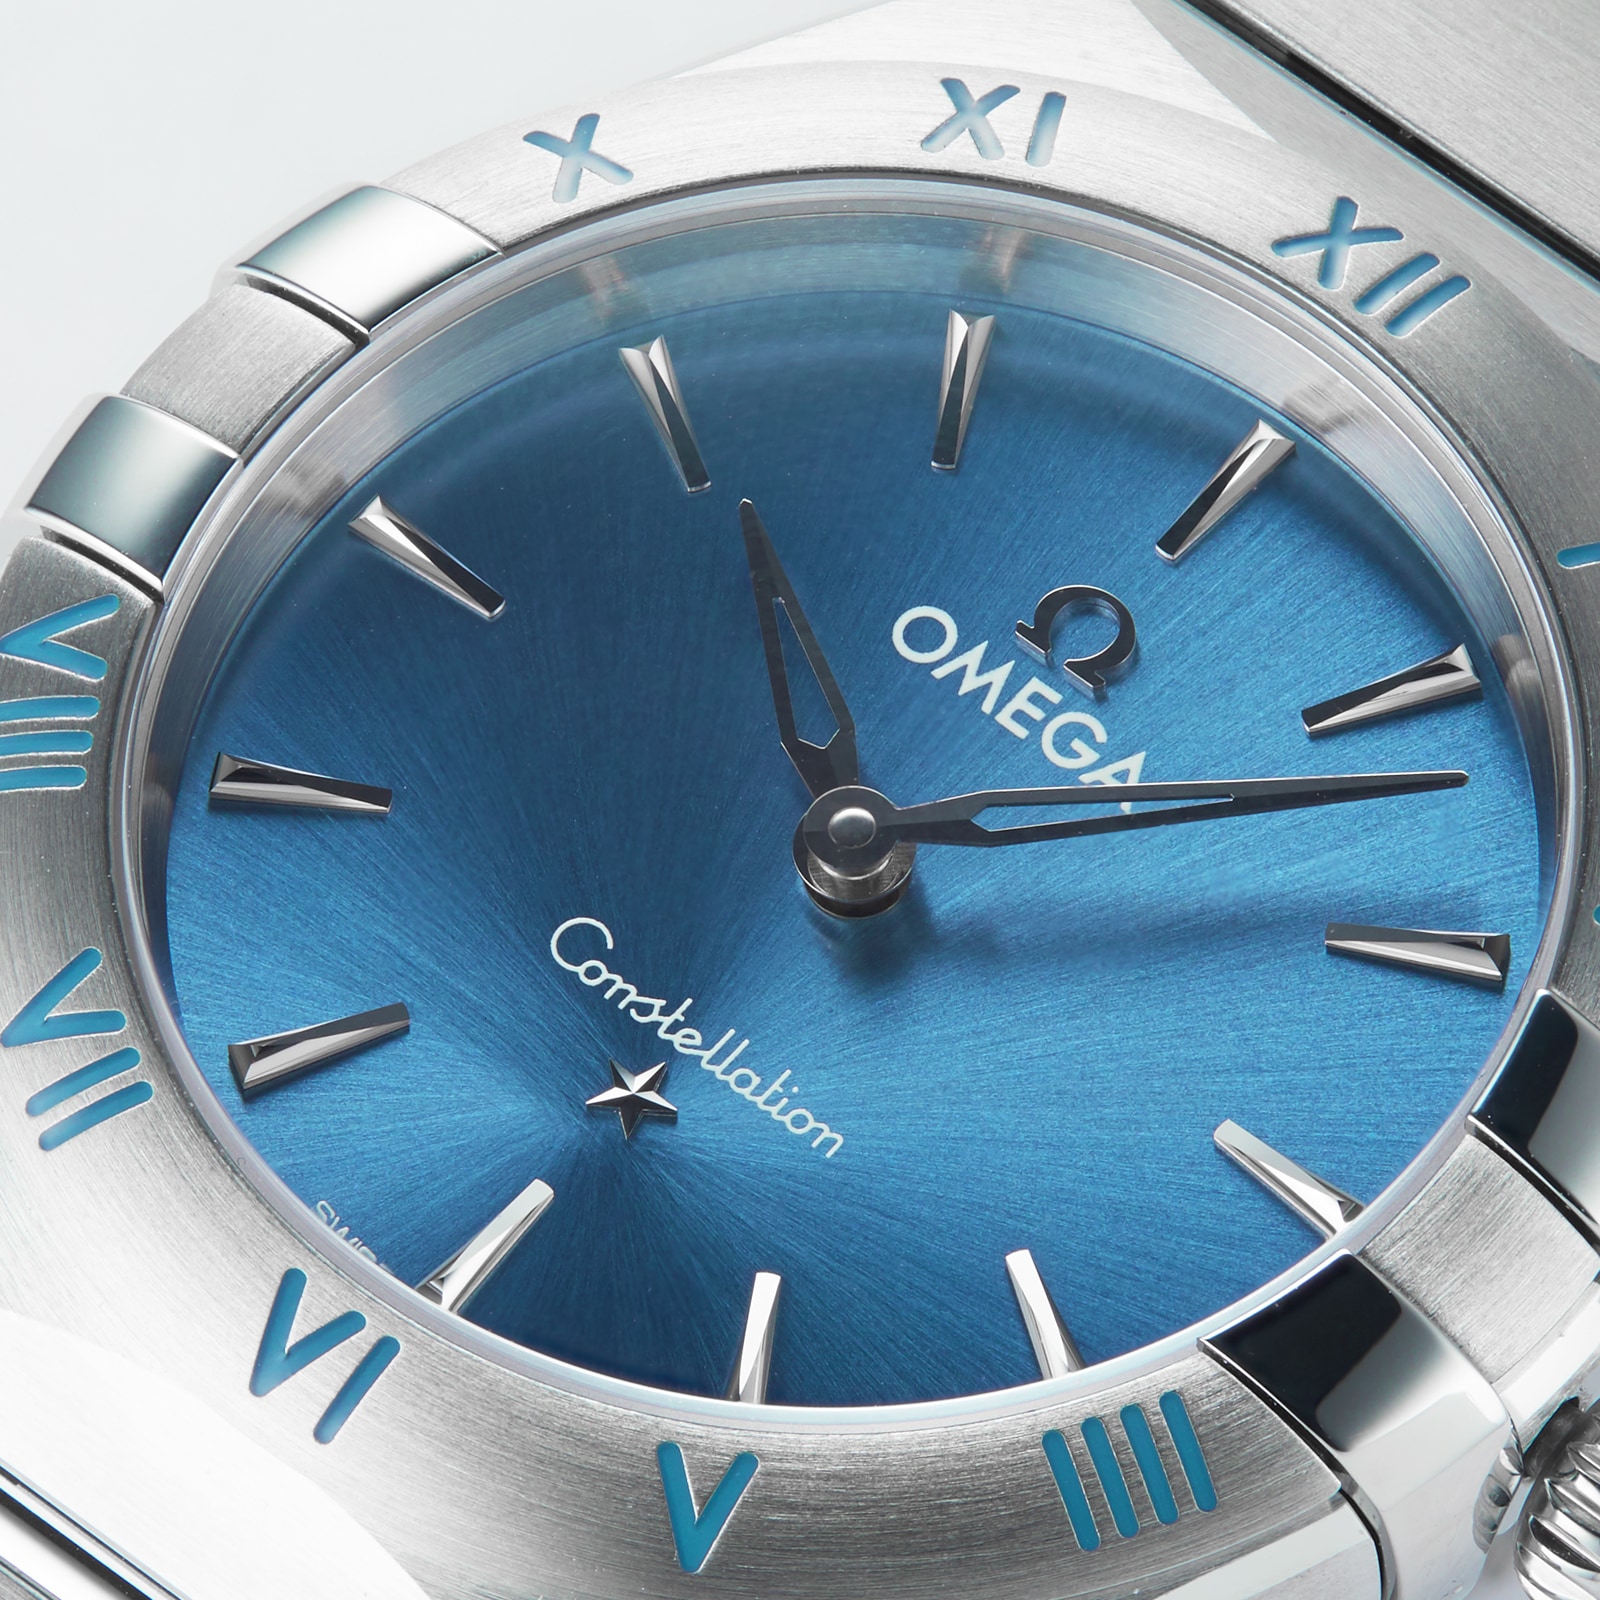 Omega constellation watch with diamonds - Women - 1763725808